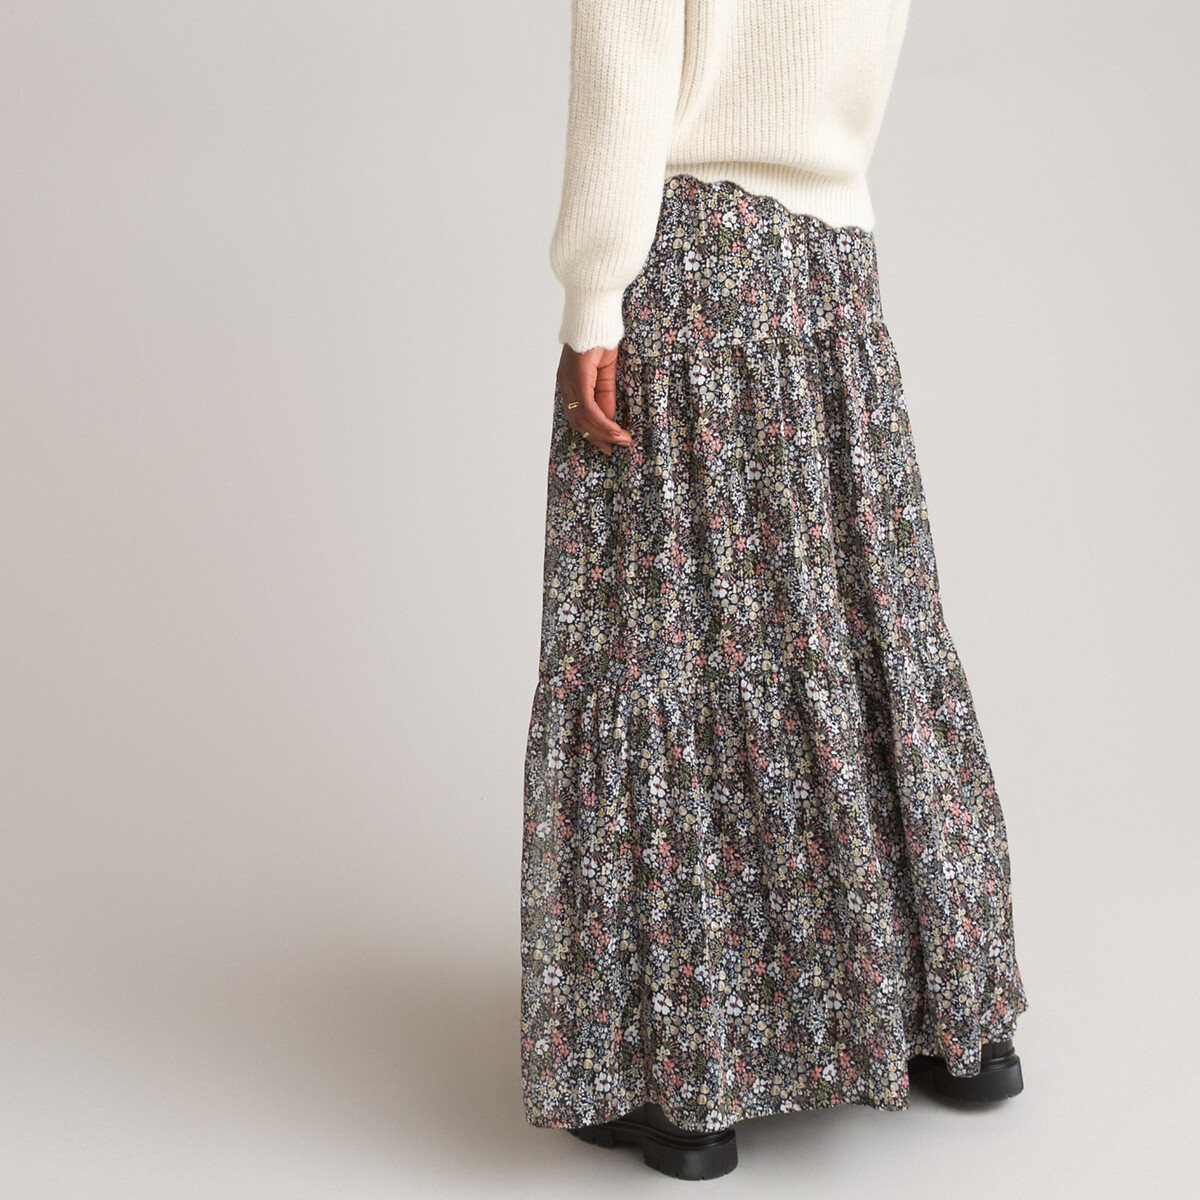 Ruffled Maxi Skirt in Paisley Print